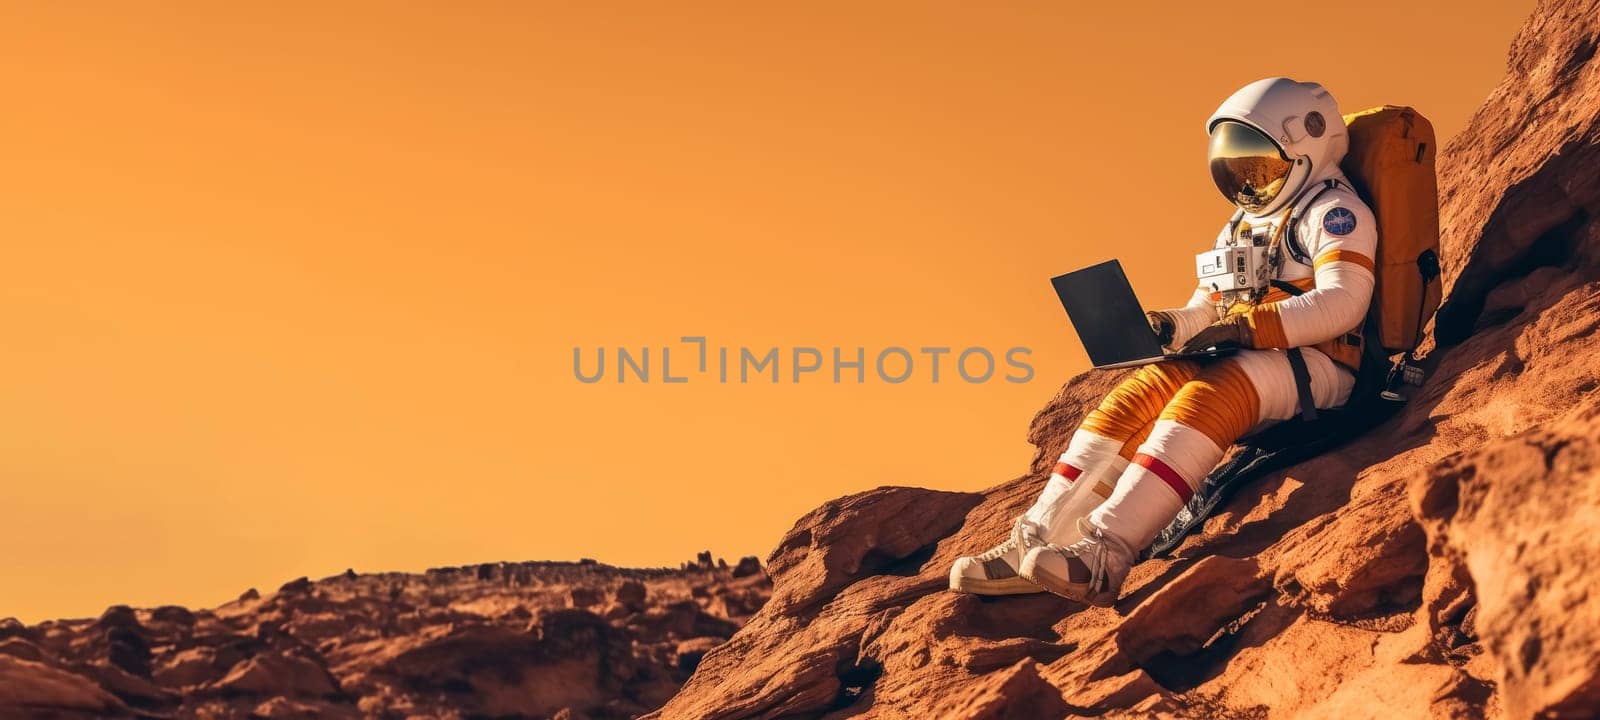 Astronaut with laptop sitting on rocky Mars-like terrain. by andreyz